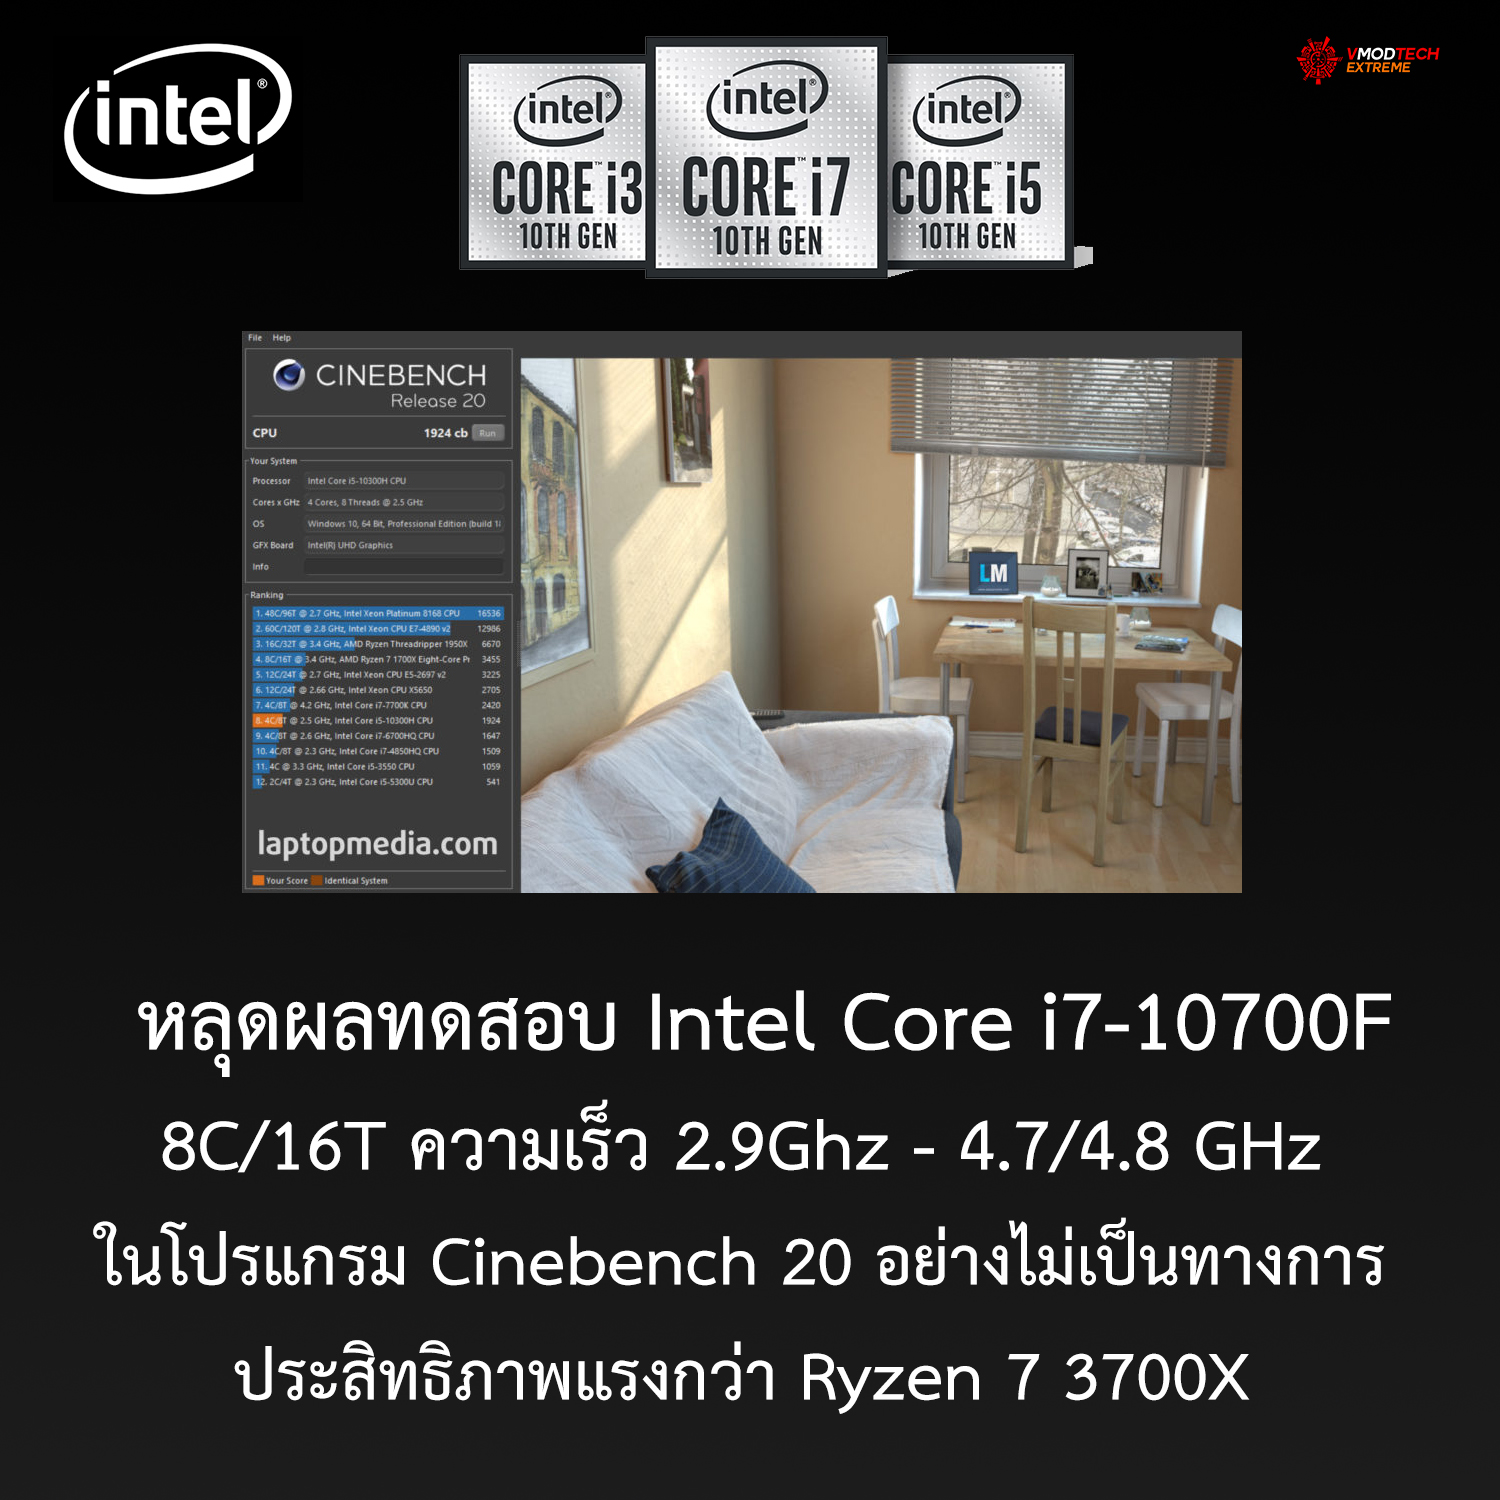 intel core i7 10700f หลุดผลทดสอบ Intel Core i7 10700F ในโปรแกรม Cinebench 20 อย่างไม่เป็นทางการ 